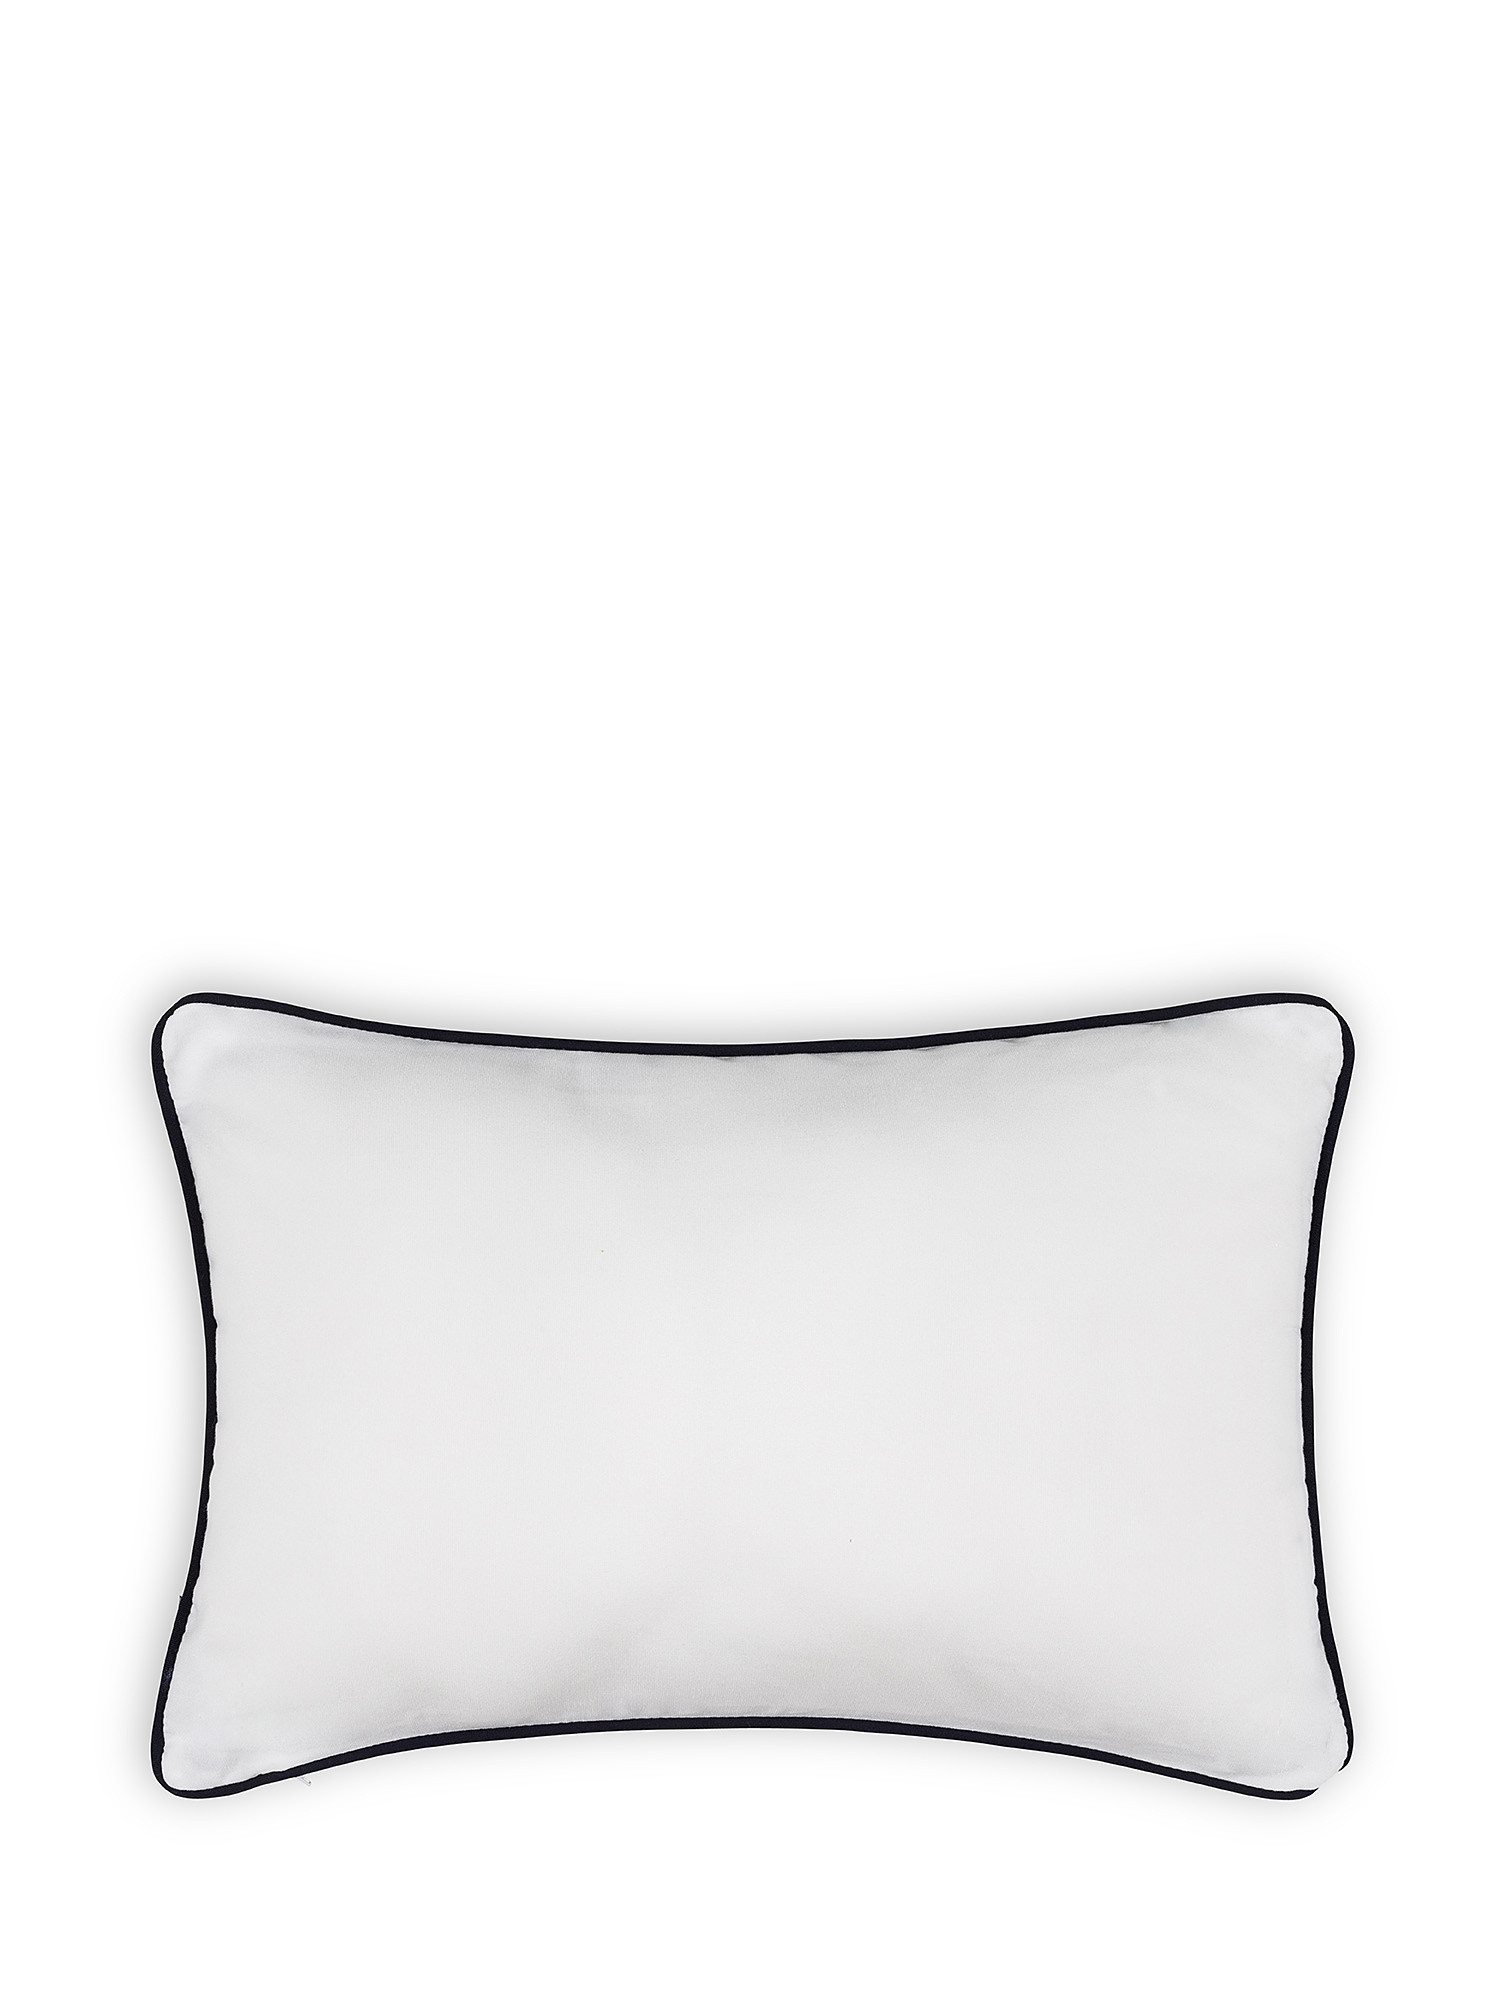 Cuscino da esterno in teflon 30x50cm, Bianco, large image number 0